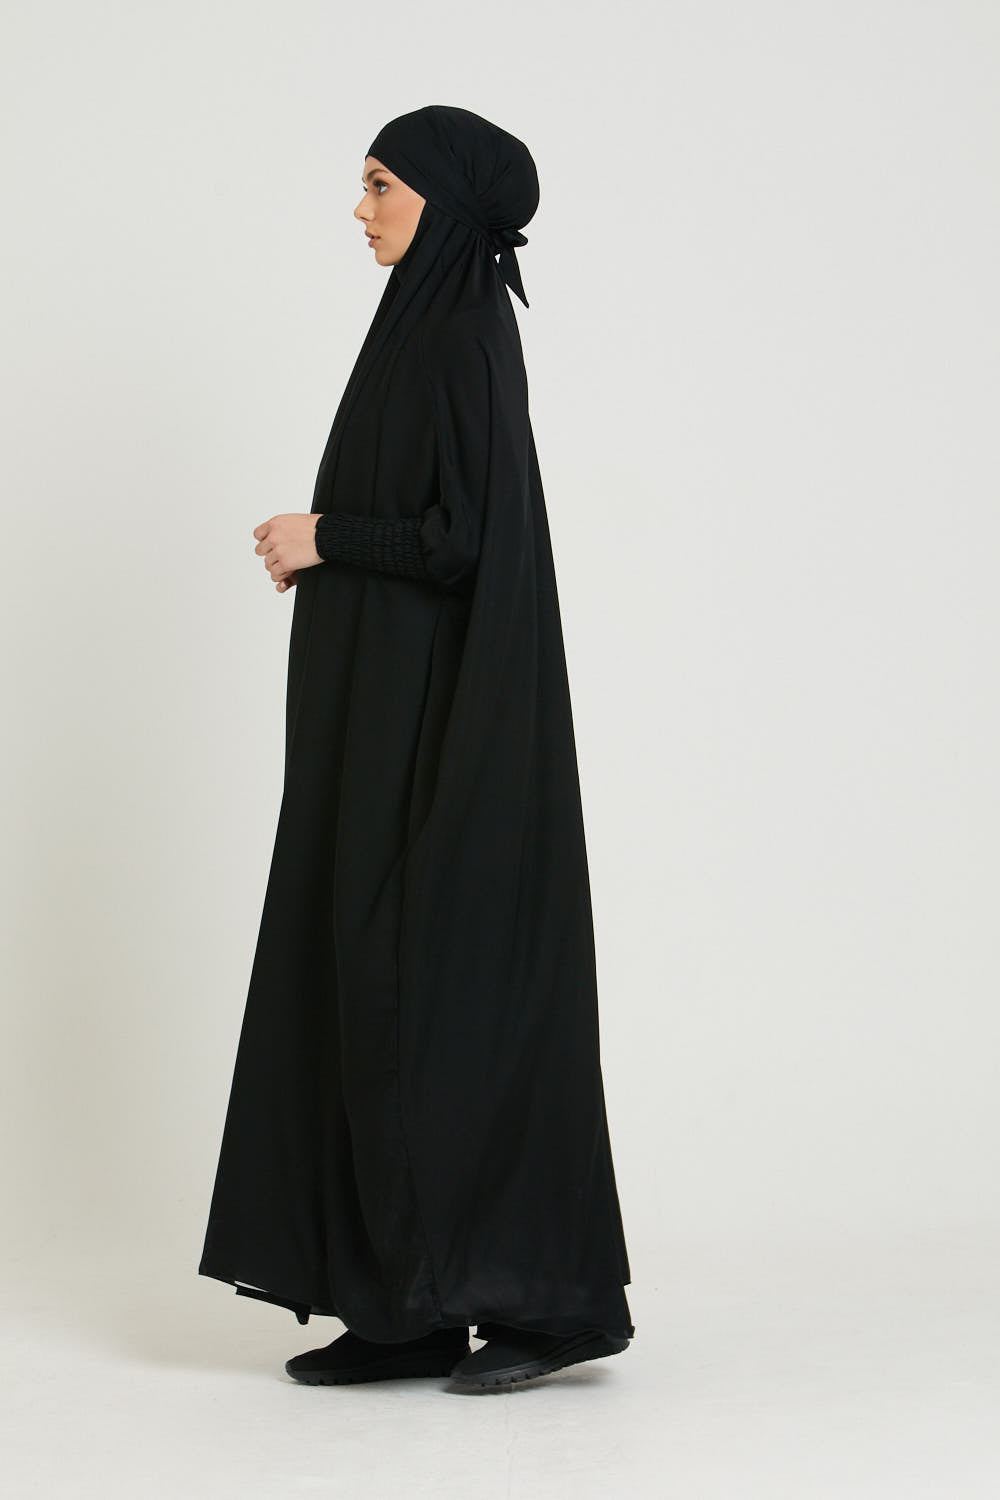 Black Jilbab: One-Piece Full Length Black Jilbab/Prayer Set